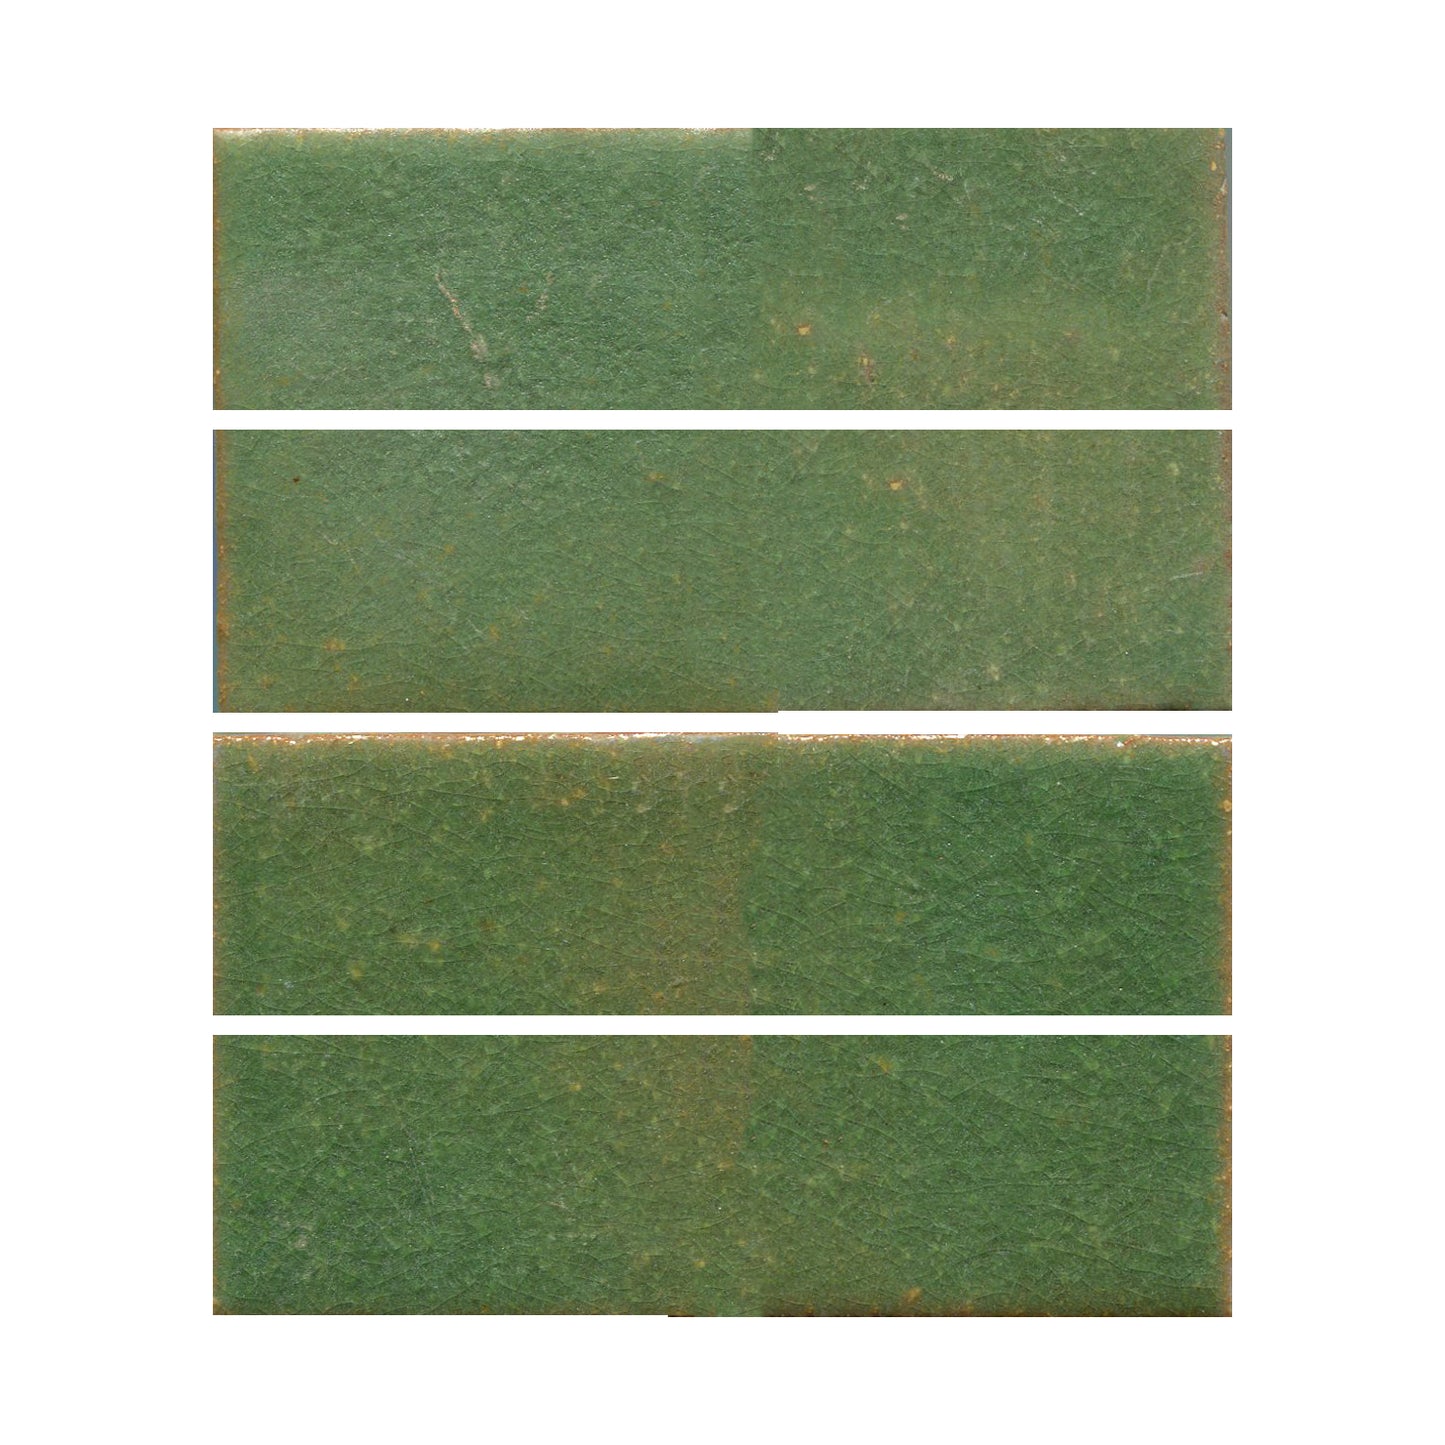 Avocado green 2x6 field tile